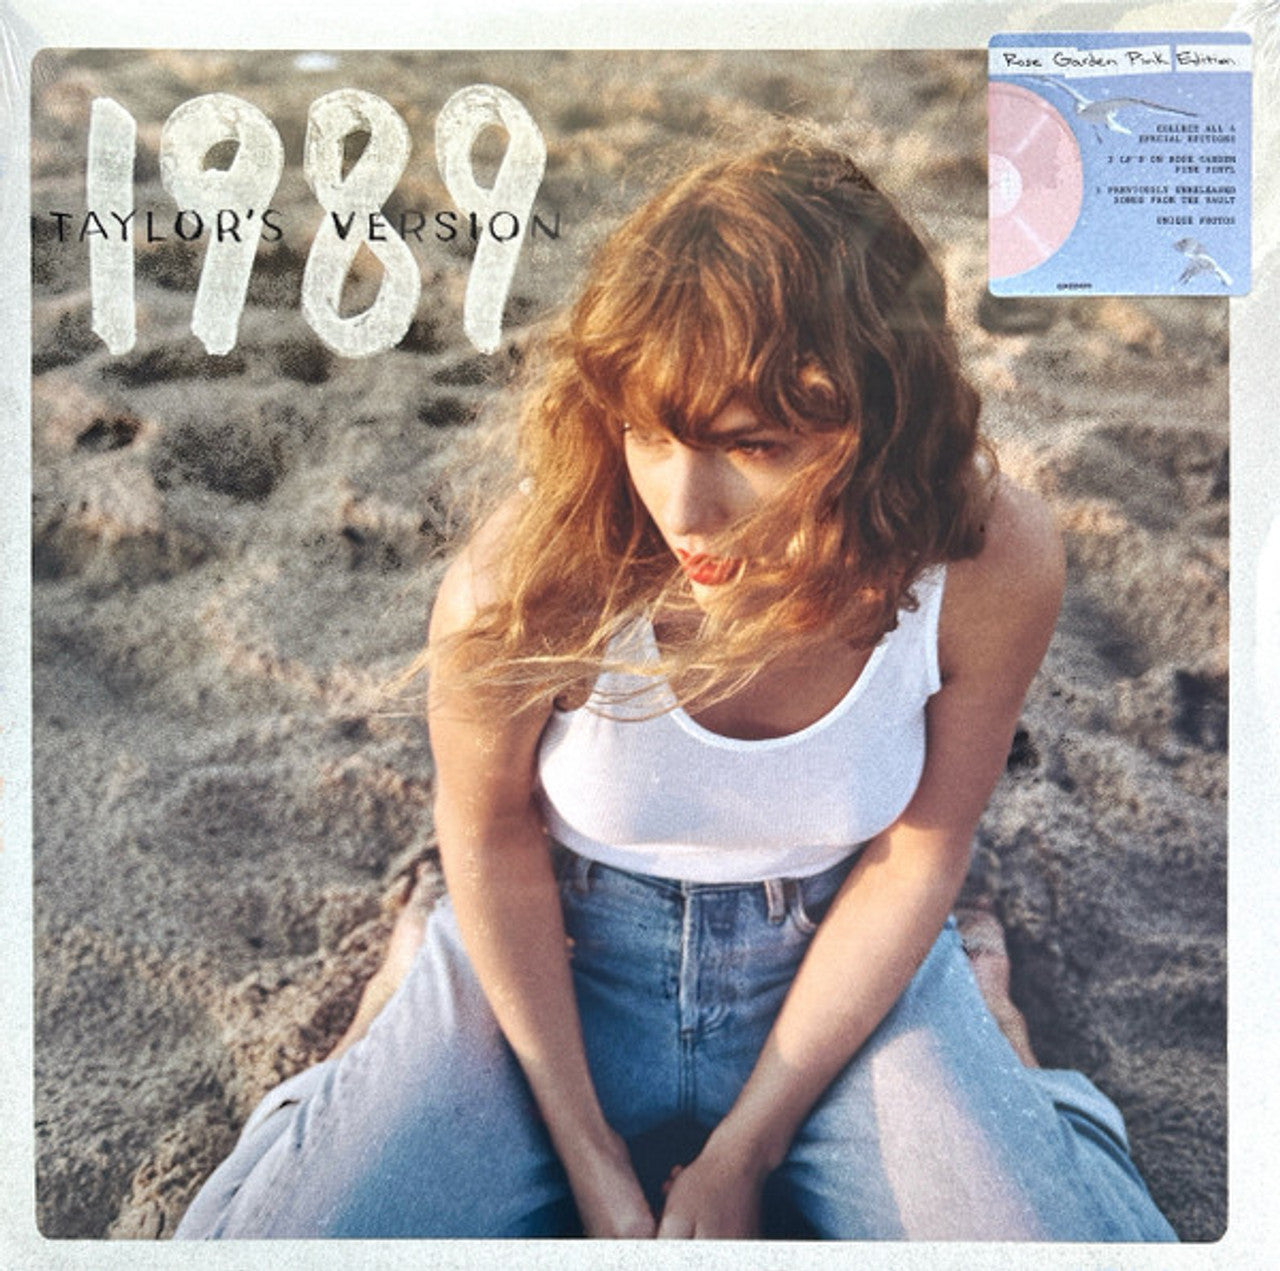 [DAMAGED] Taylor Swift - 1989 (Taylor's Version) [Rose Garden Pink Vinyl]